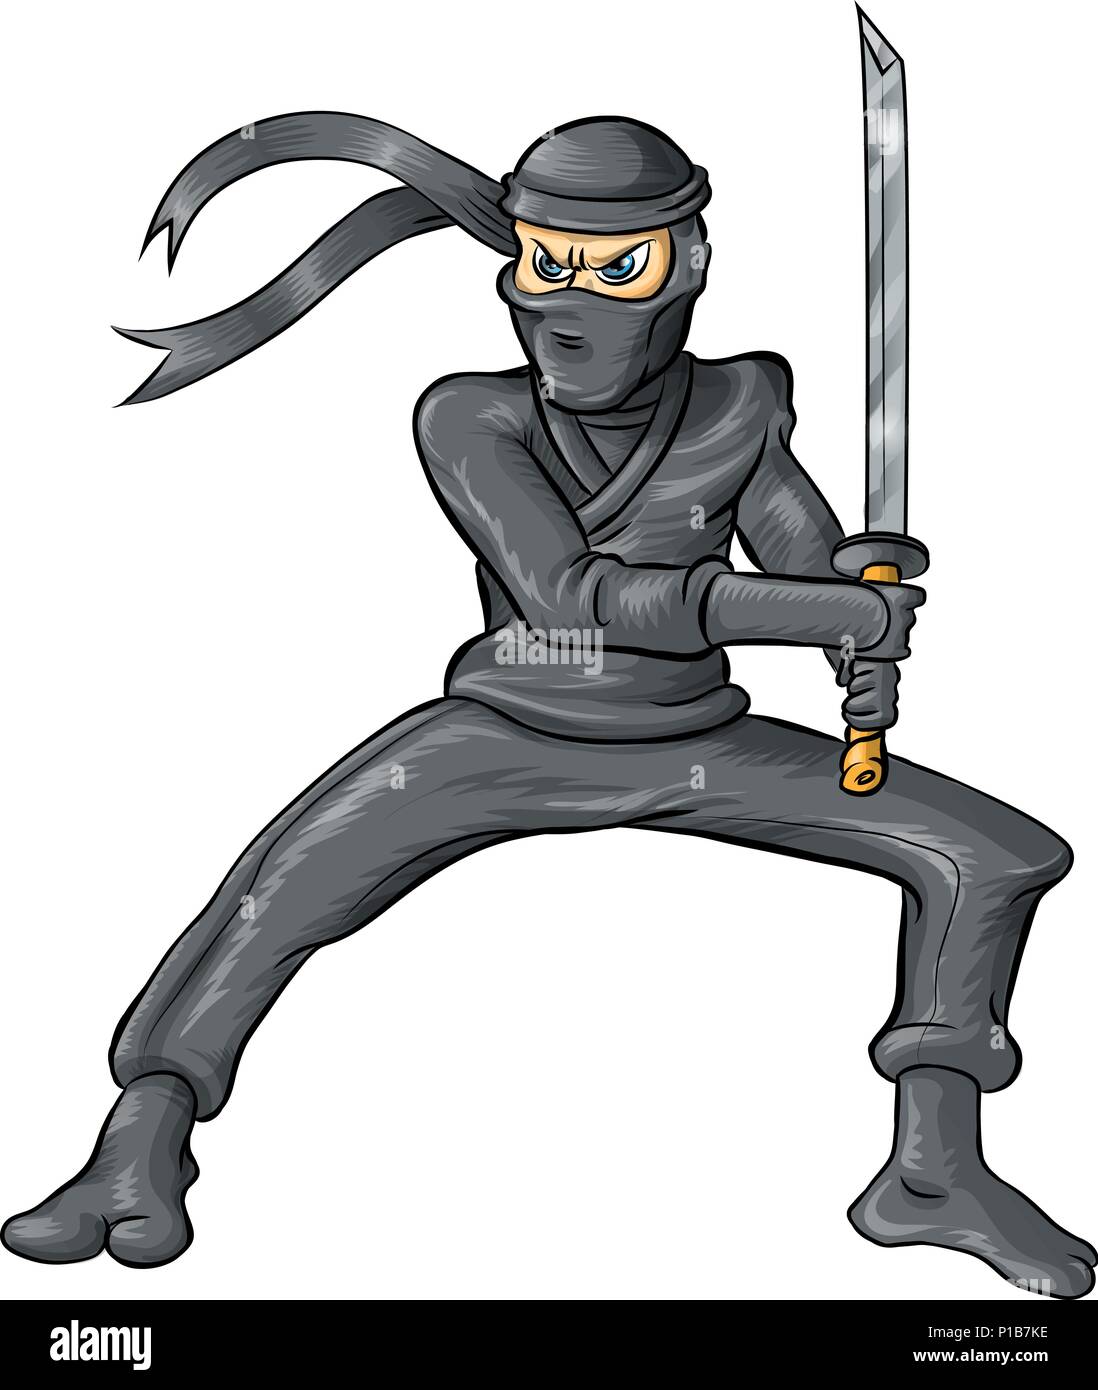 https://c8.alamy.com/comp/P1B7KE/ninja-cartoon-isolated-on-white-background-P1B7KE.jpg